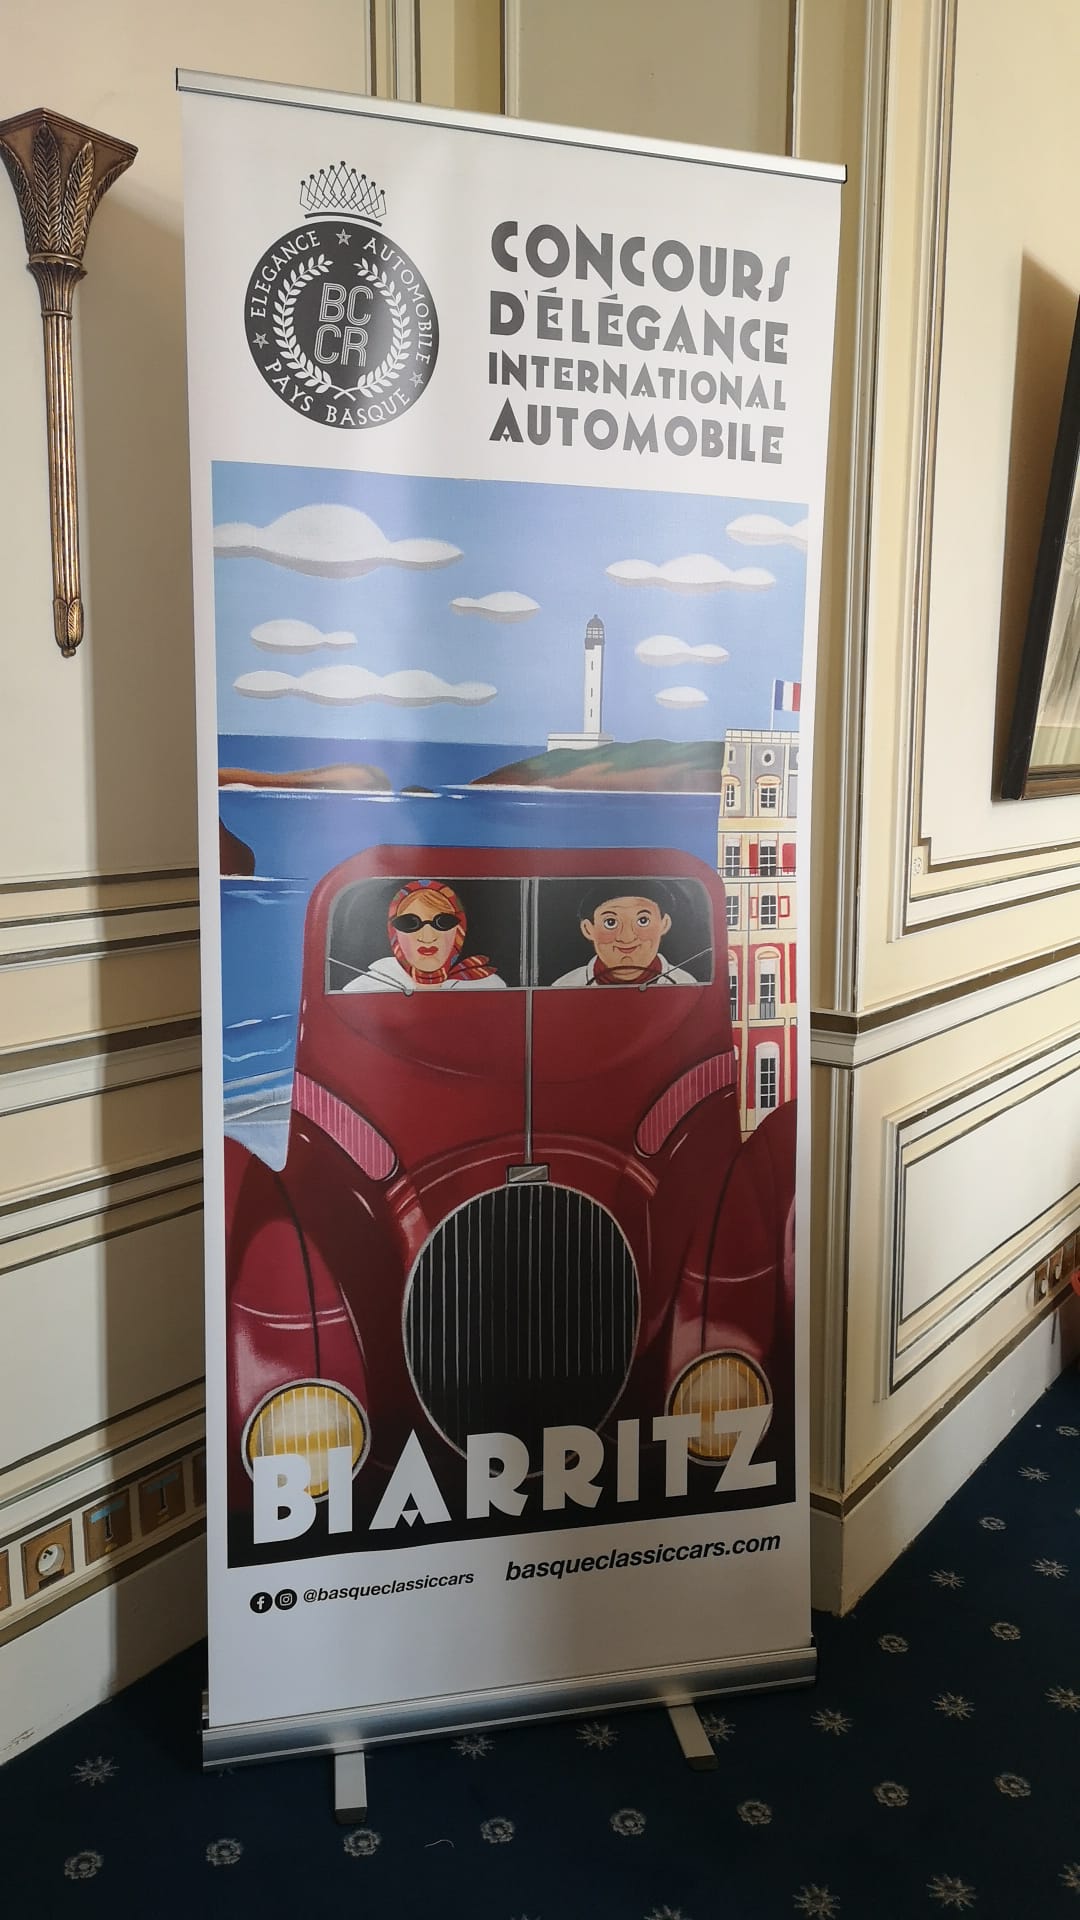 Biadrtiz_concourse_2021 Se viene: Concours d'Élégance International Automobile Biarritz - SemanalClásico - Revista online de coches clásicos, de colección y sport